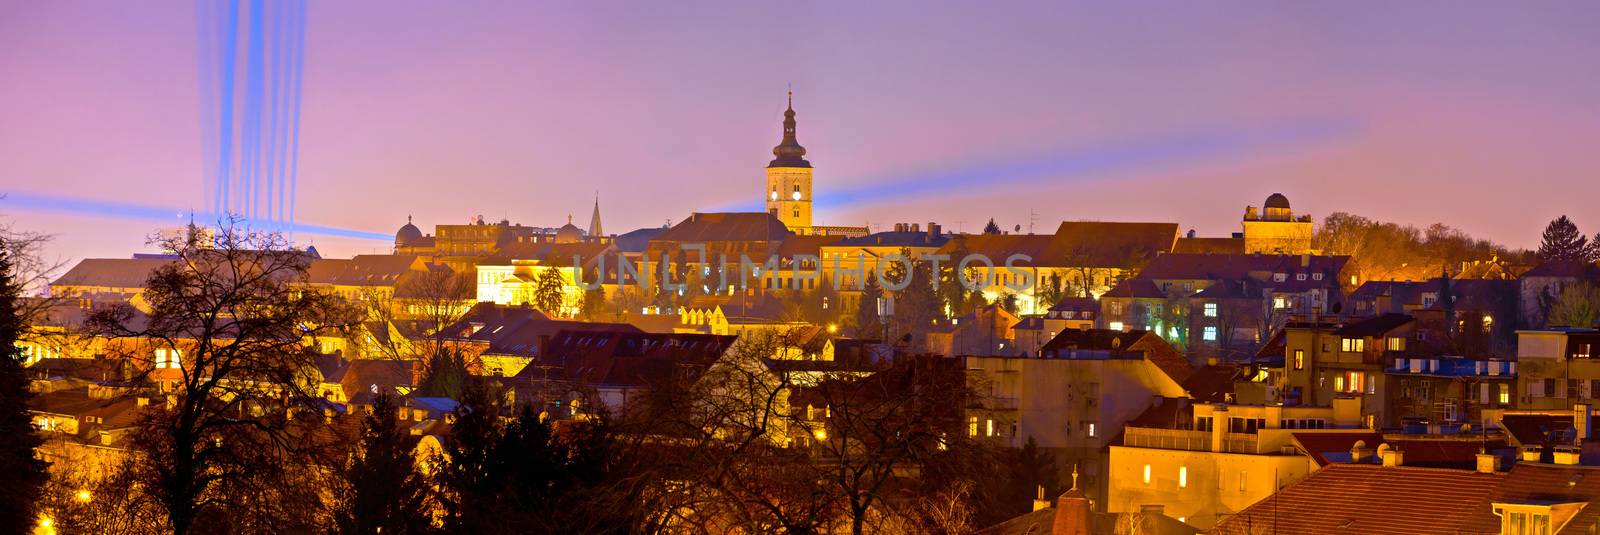 Zagreb historic upper town night view by xbrchx